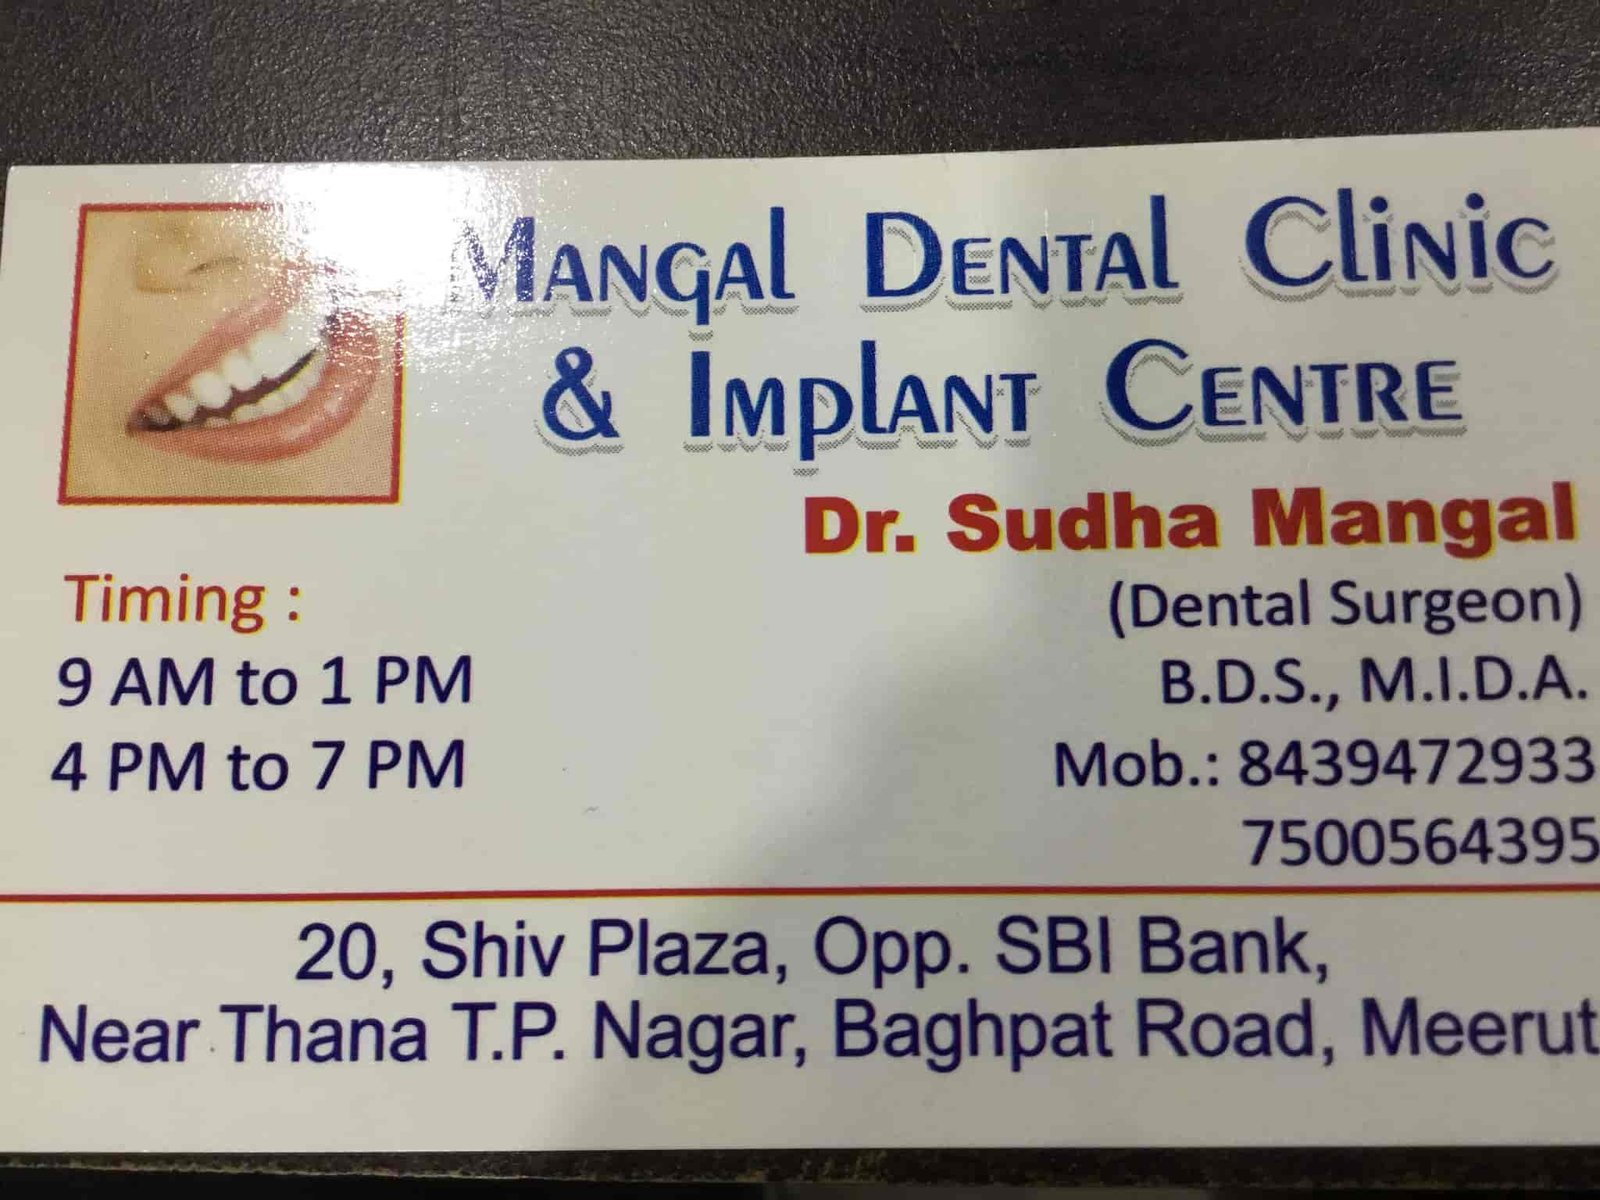 Mangal Dental Clinic